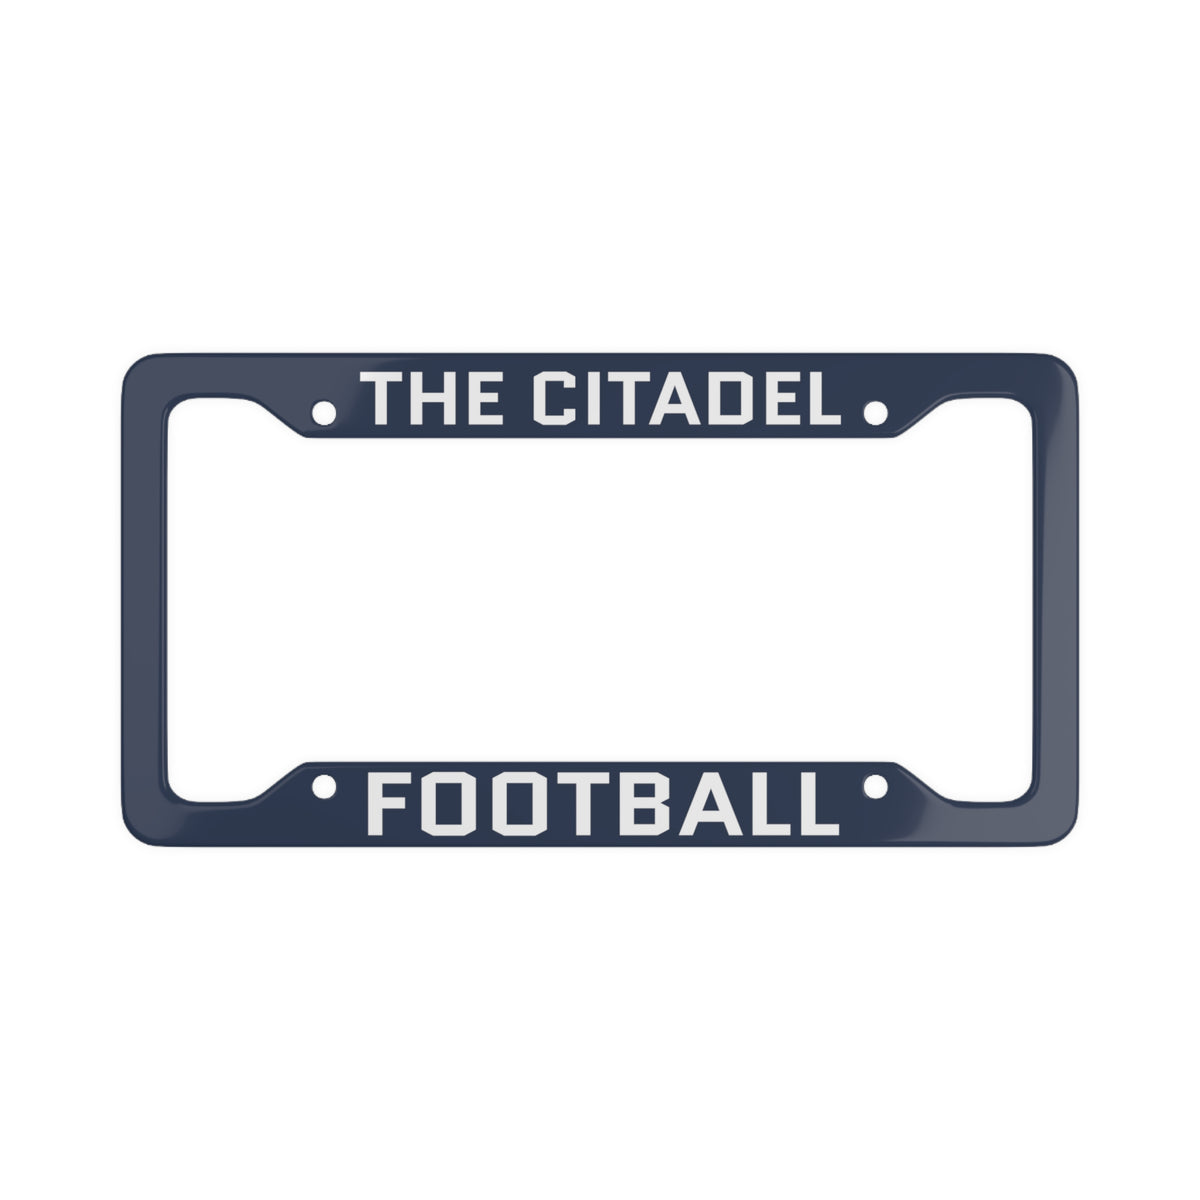 The Citadel, Football, License Plate Frame